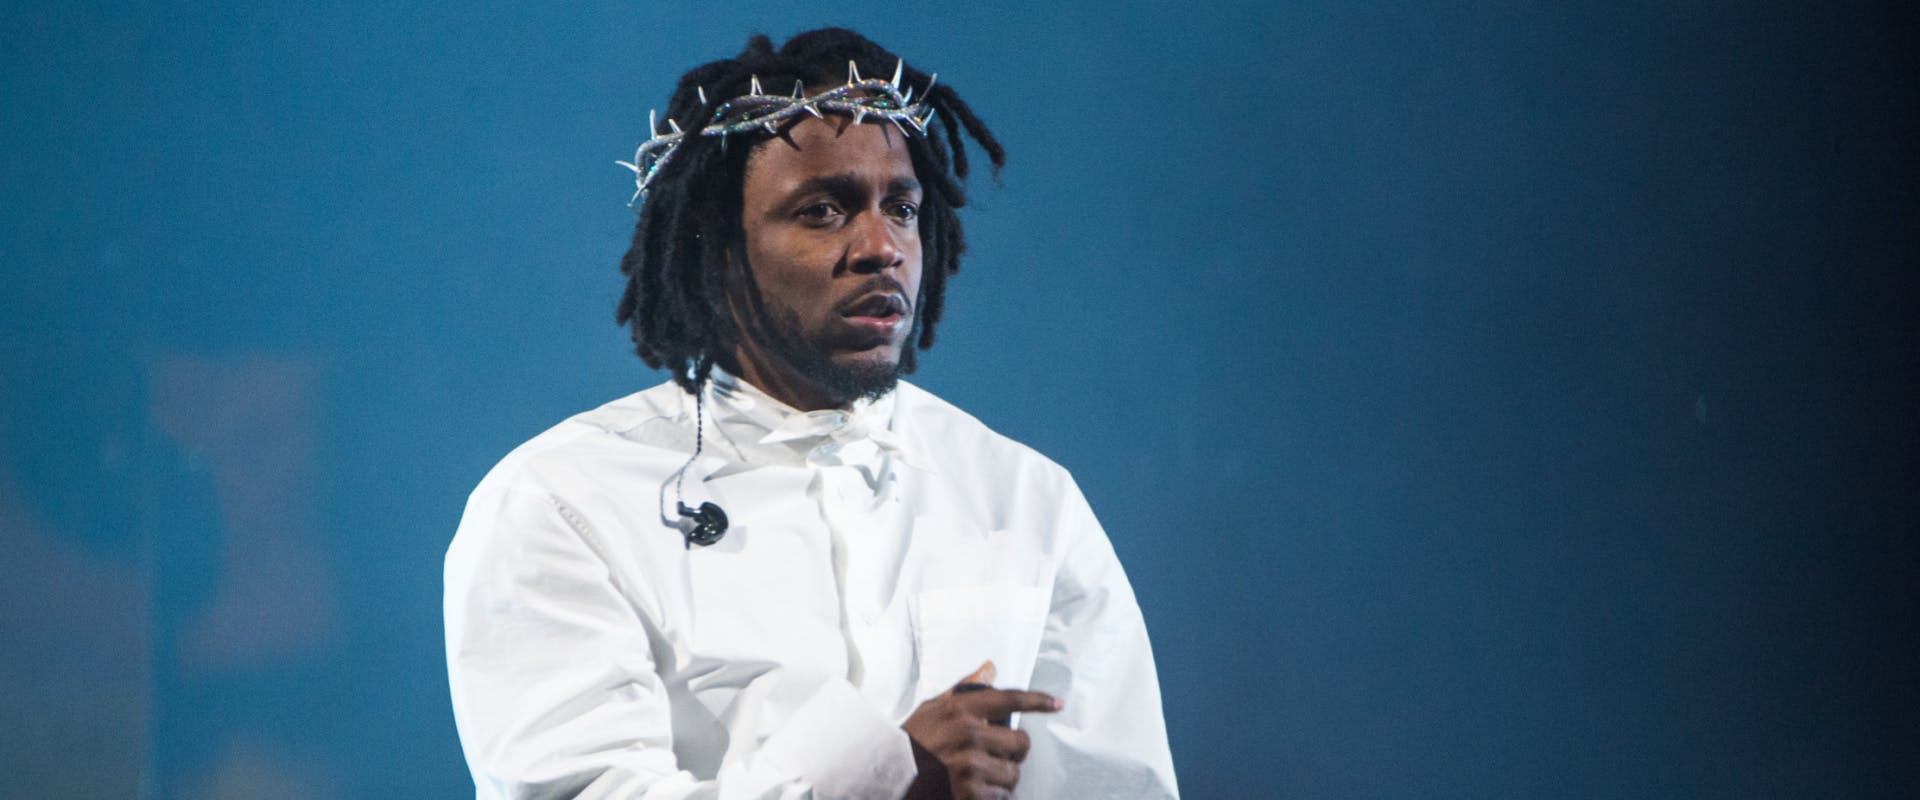 Terrace Martin to Drop 'Drones' Album Featuring Kendrick Lamar Friday